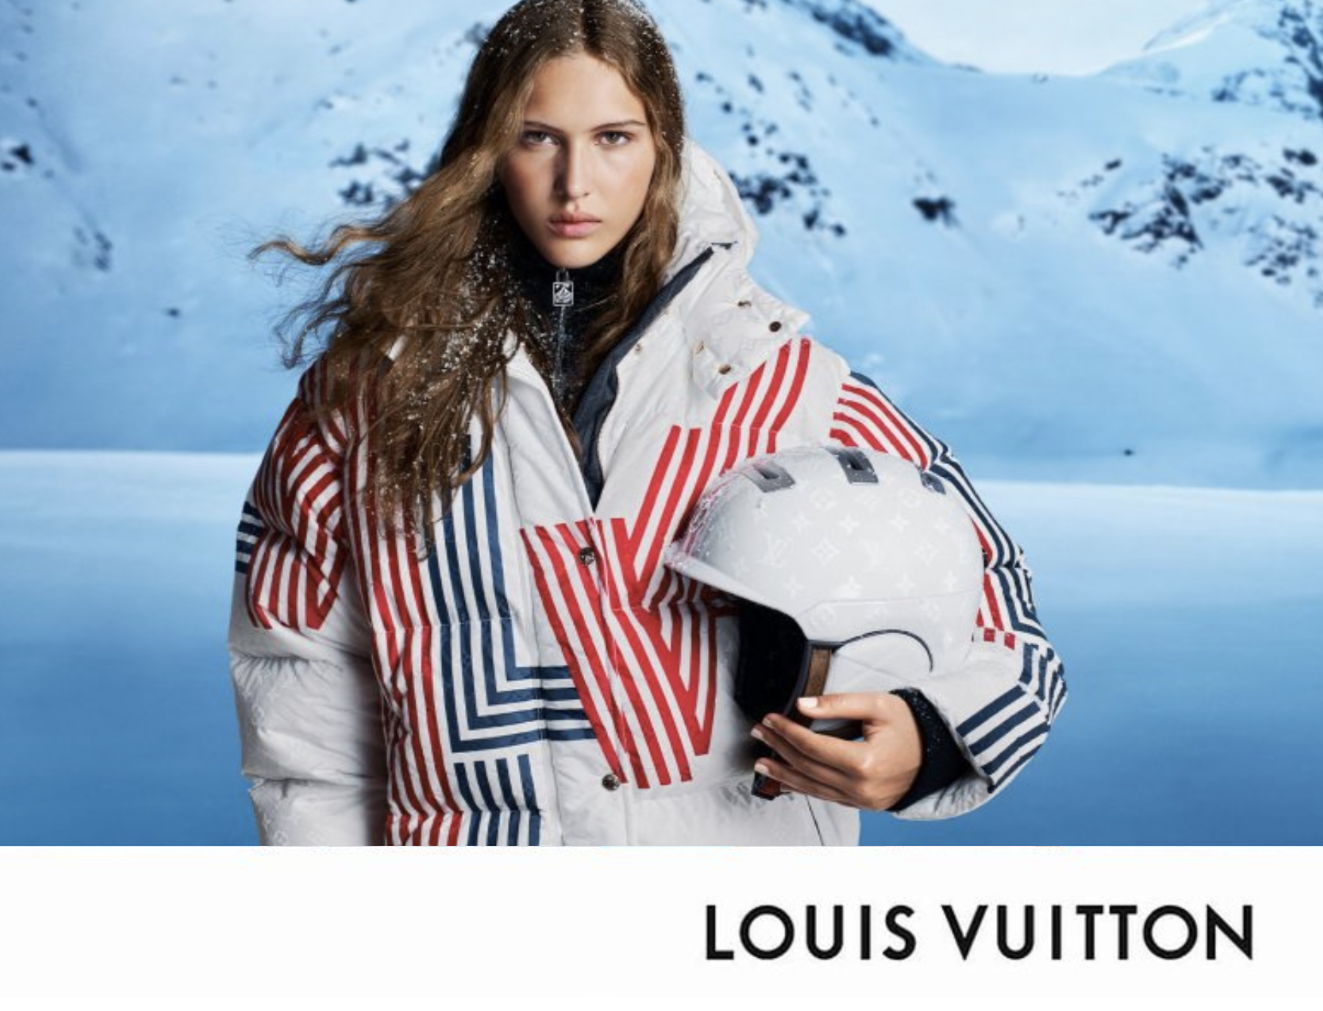 Ethan-James-Green-Louis-Vuitton-Ski-2023-Campaign-7.png